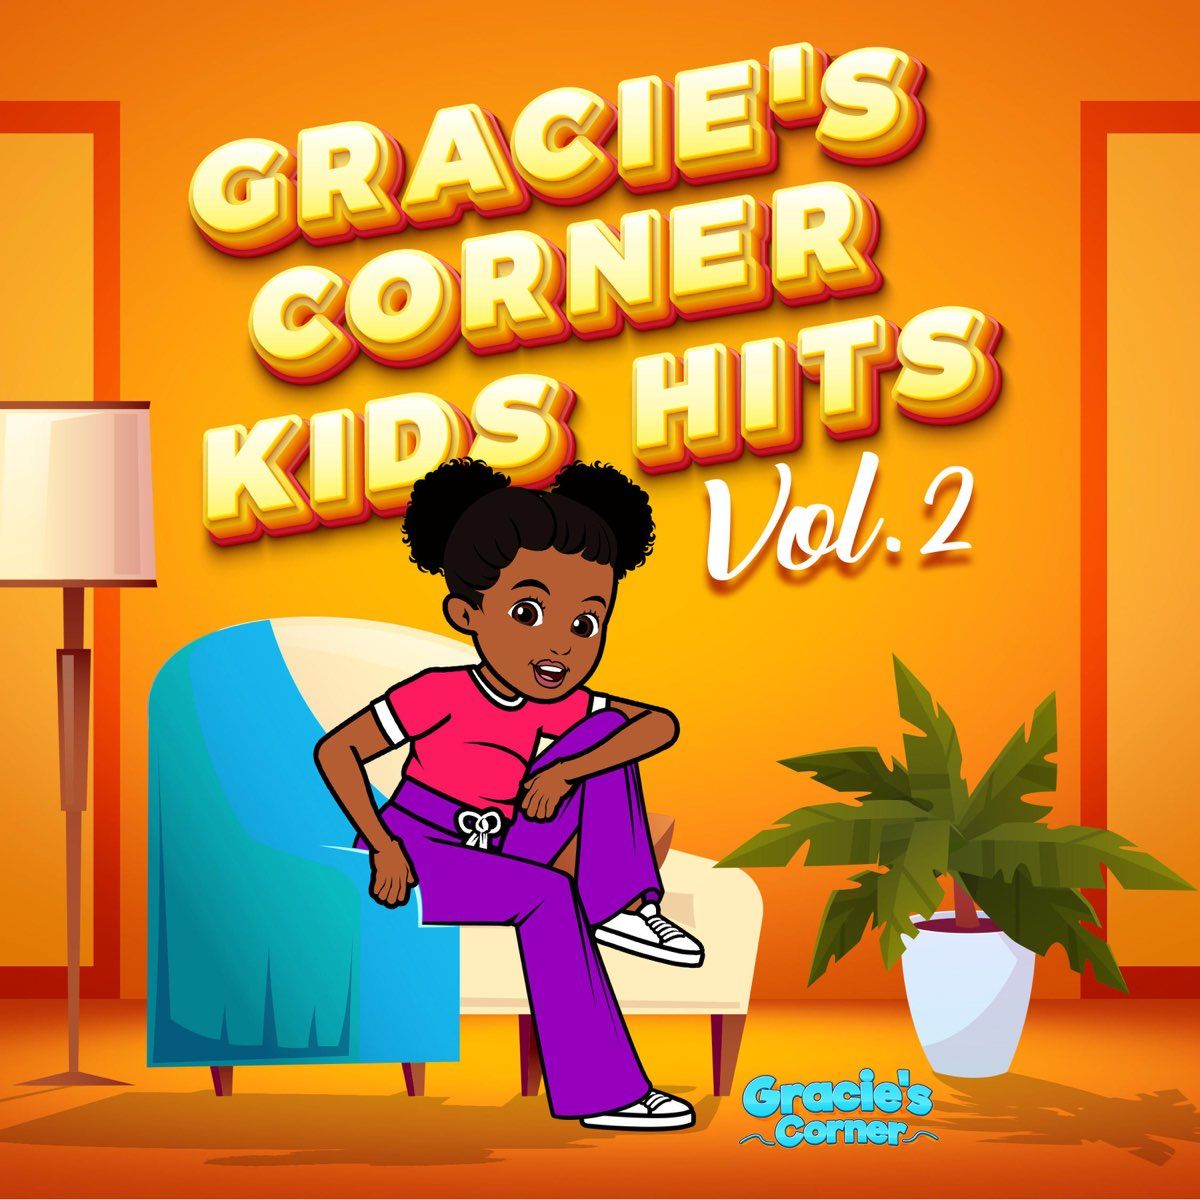 Gracie's Corner Kids Hits, Vol. 2 by Gracie's Corner